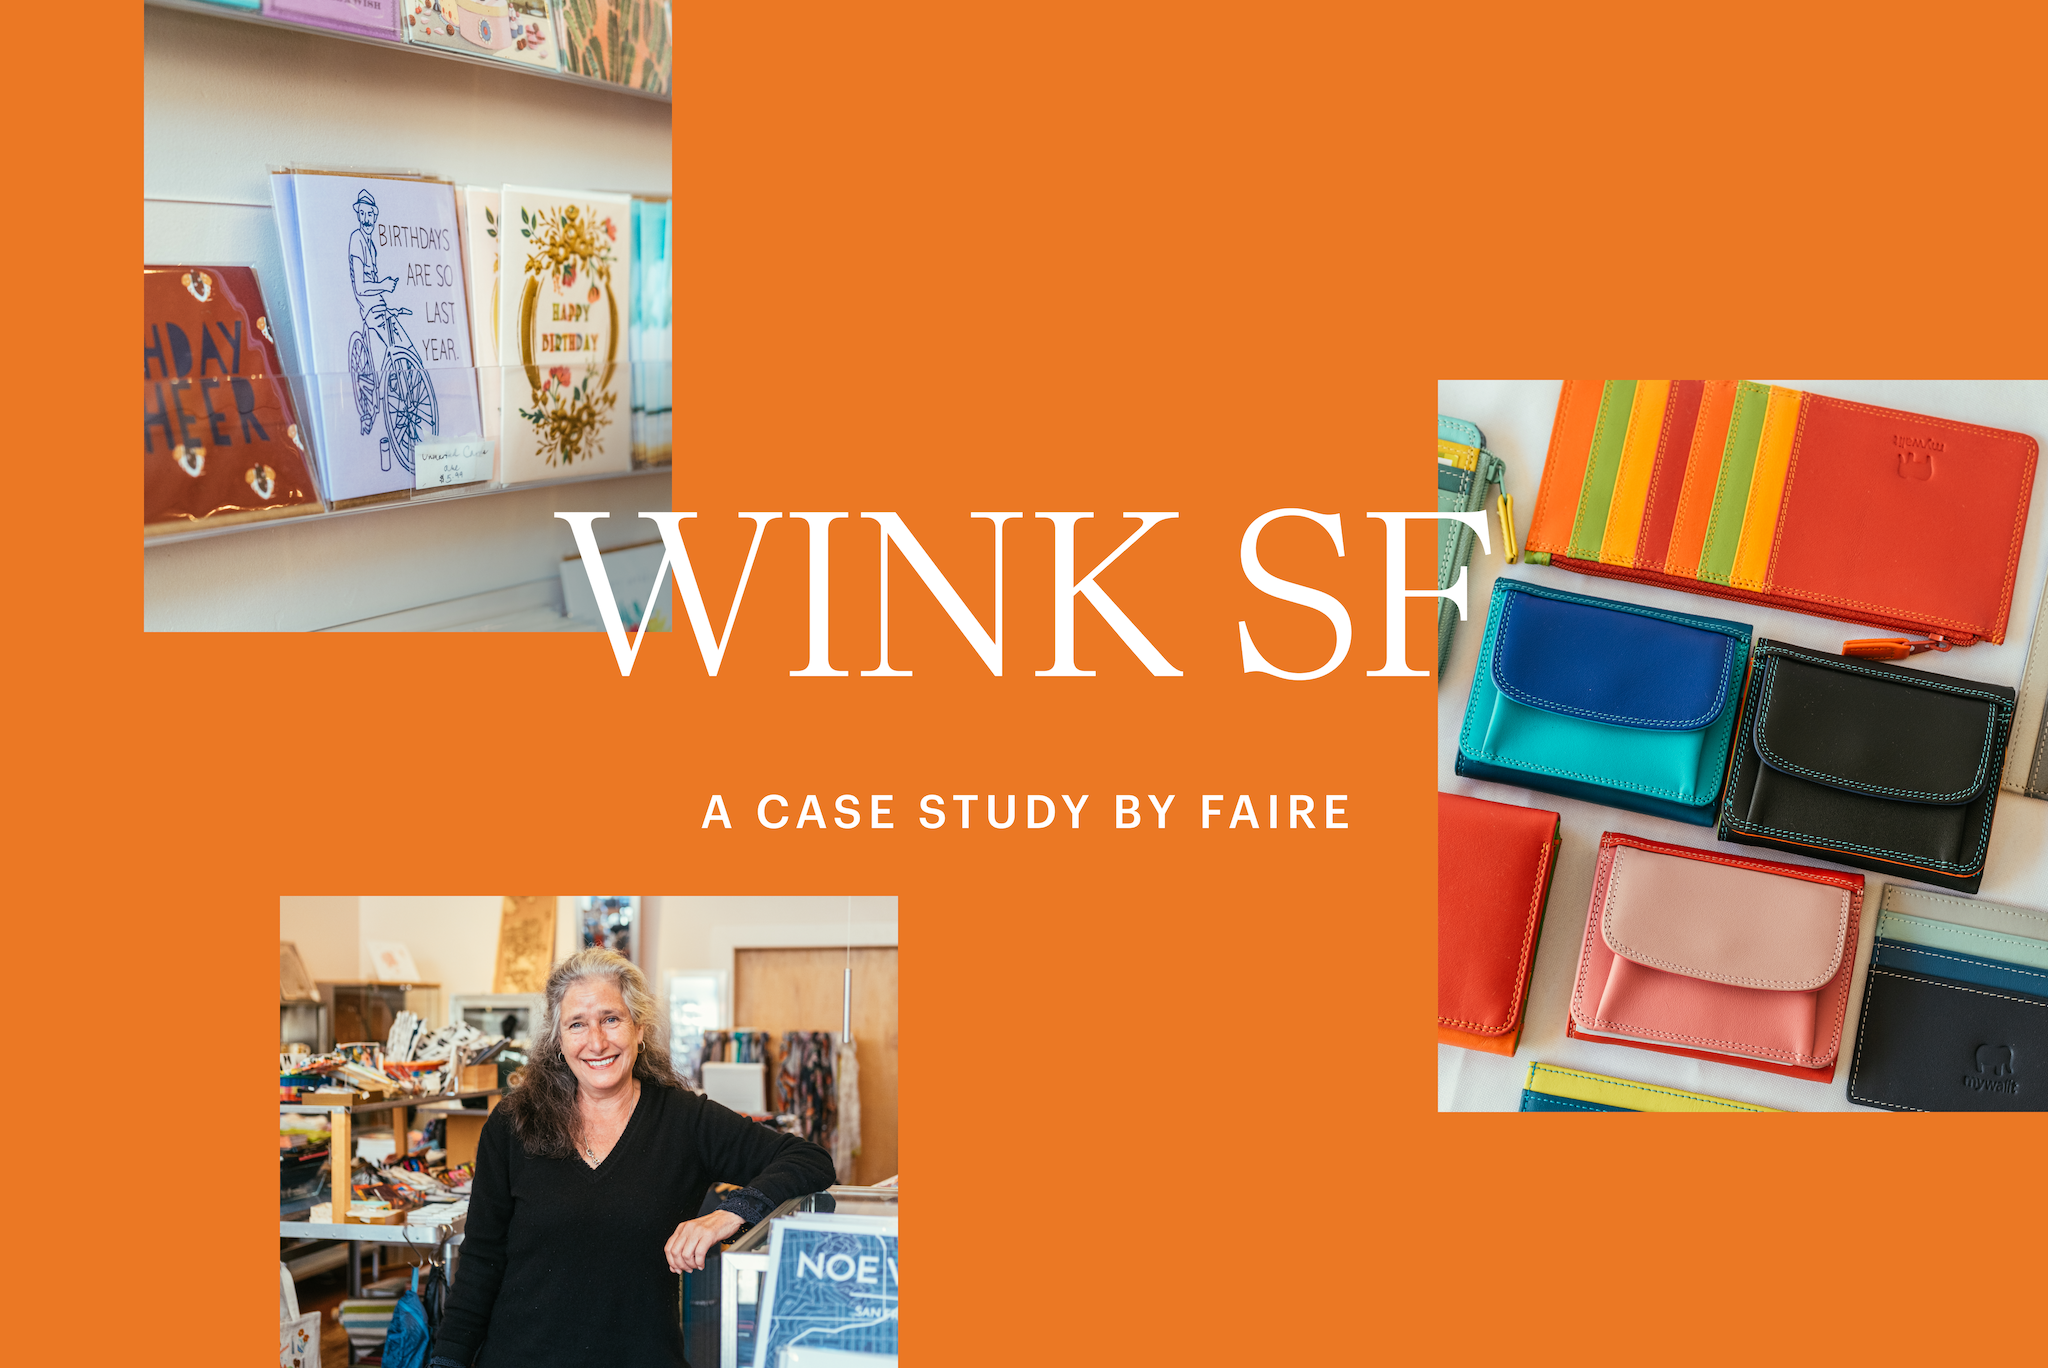 WINK SF, a boutique retailer in San Francisco